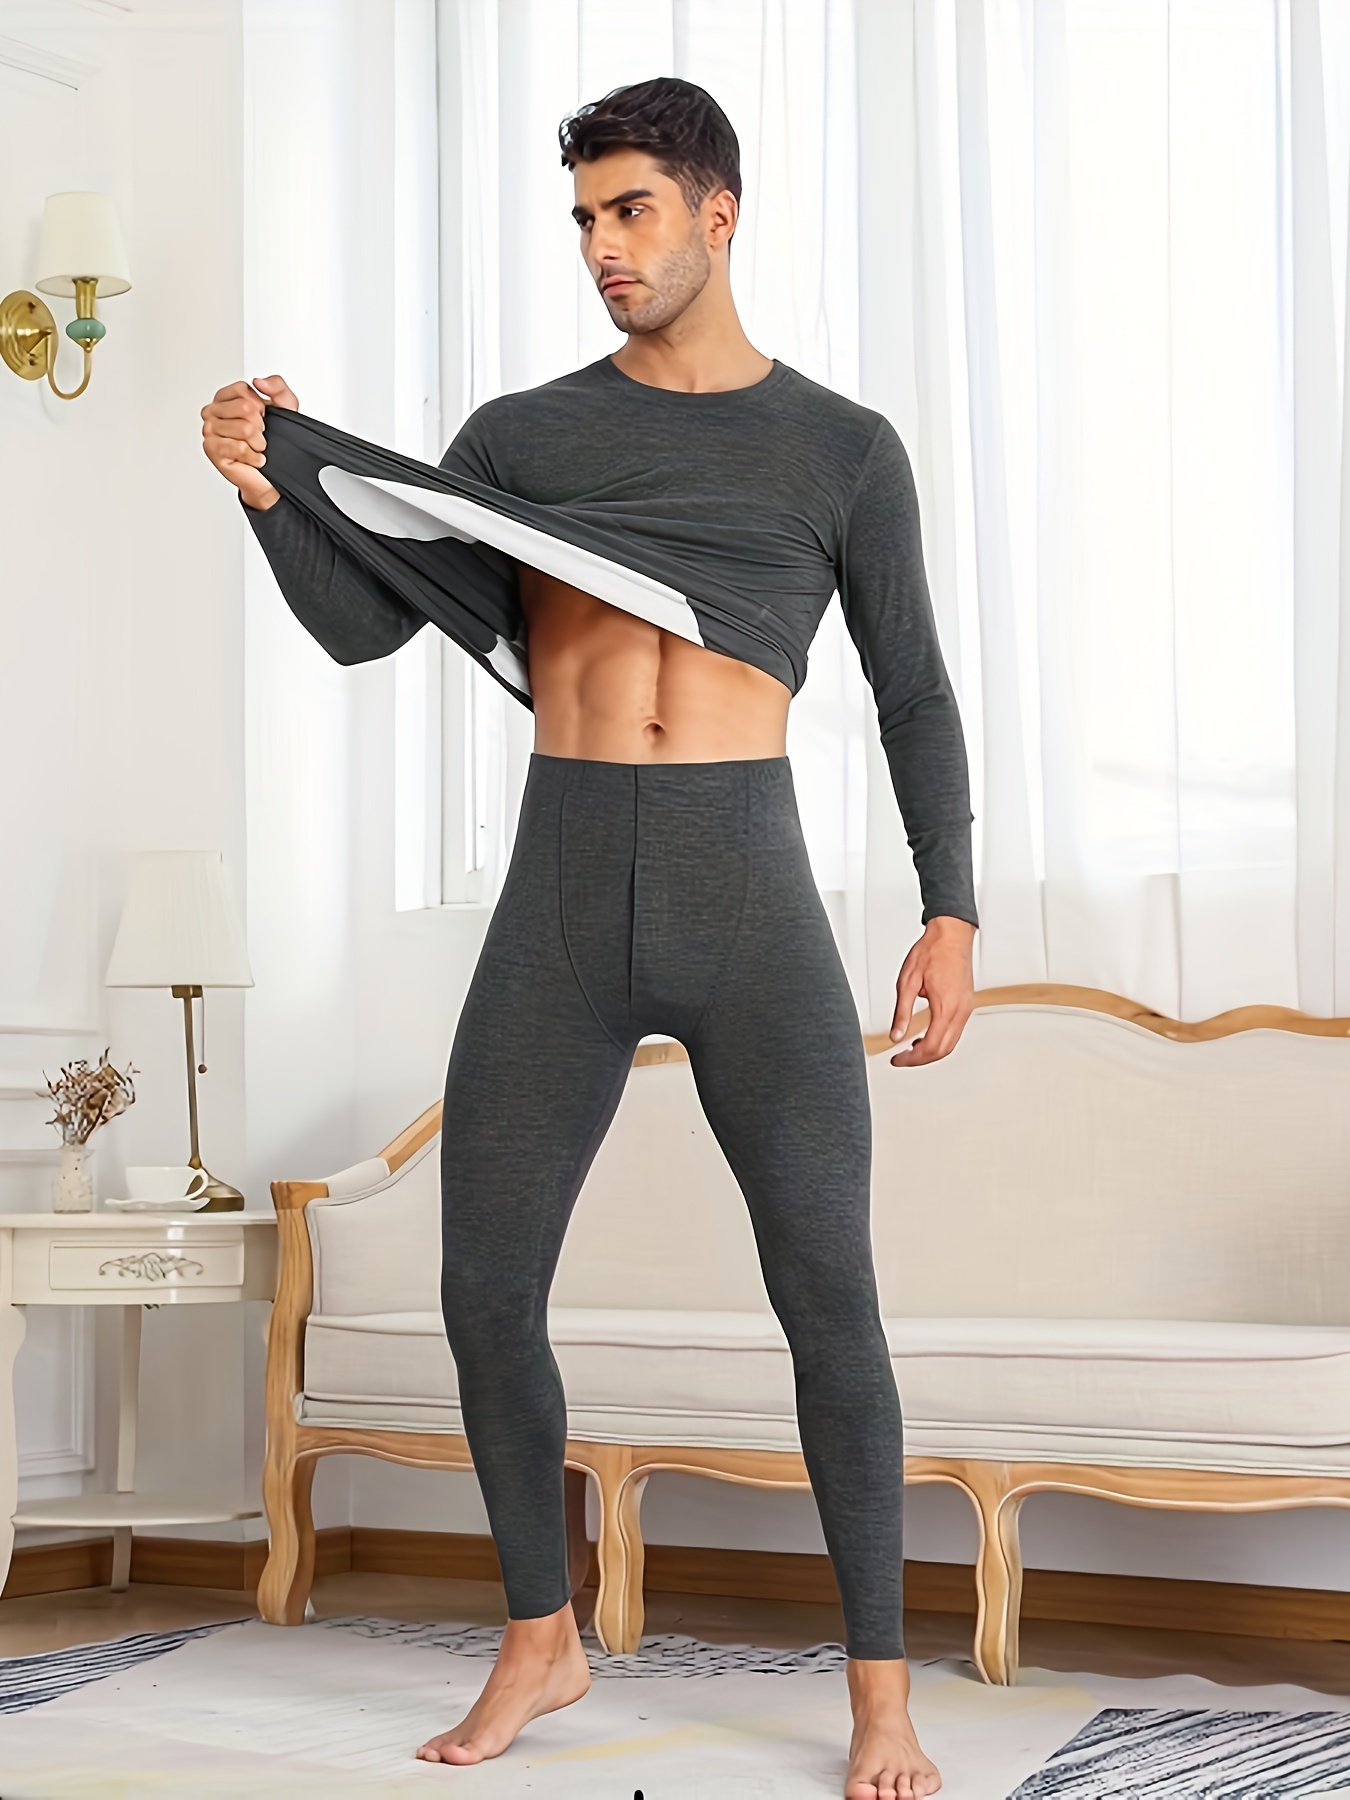 Men Thermal Long Johns Bottoms Long Underwear Base Layer Bottoms